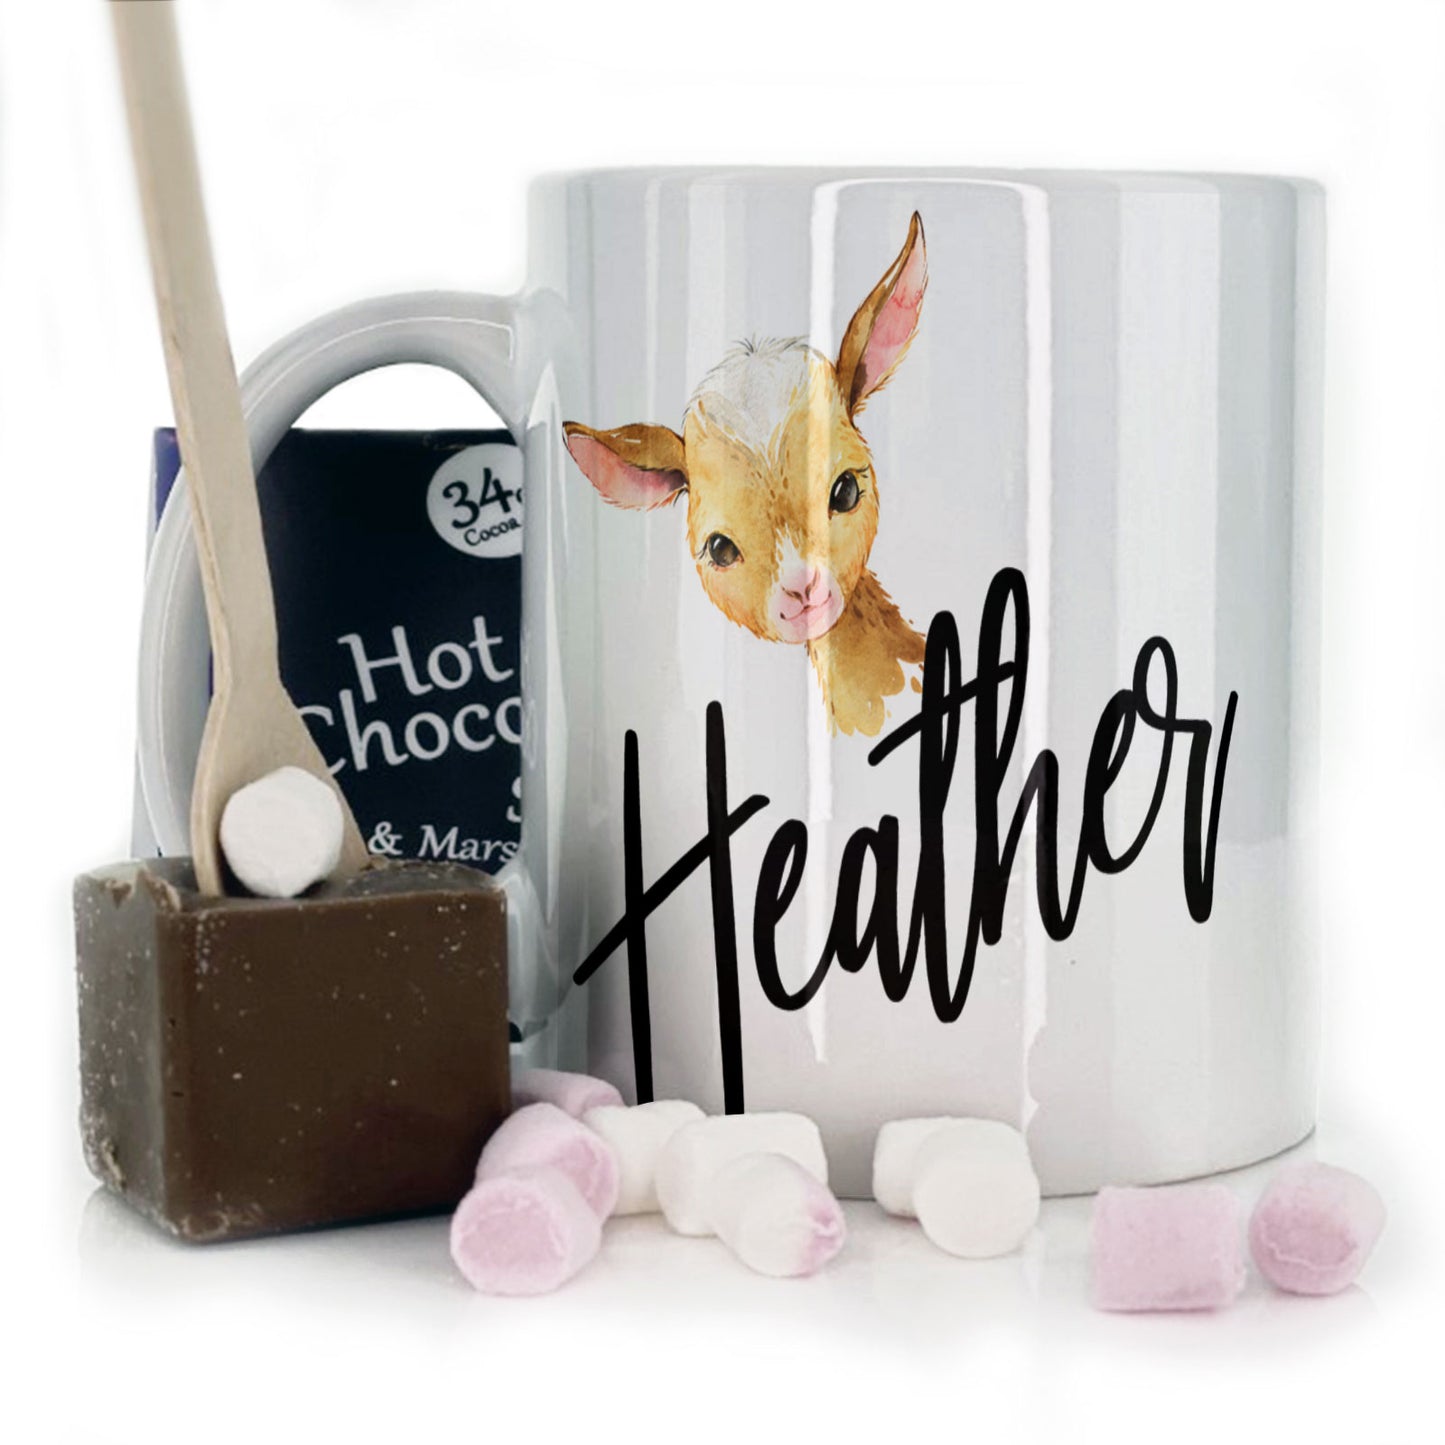 Personalised Mug with Stylish Text and Ginger Goat